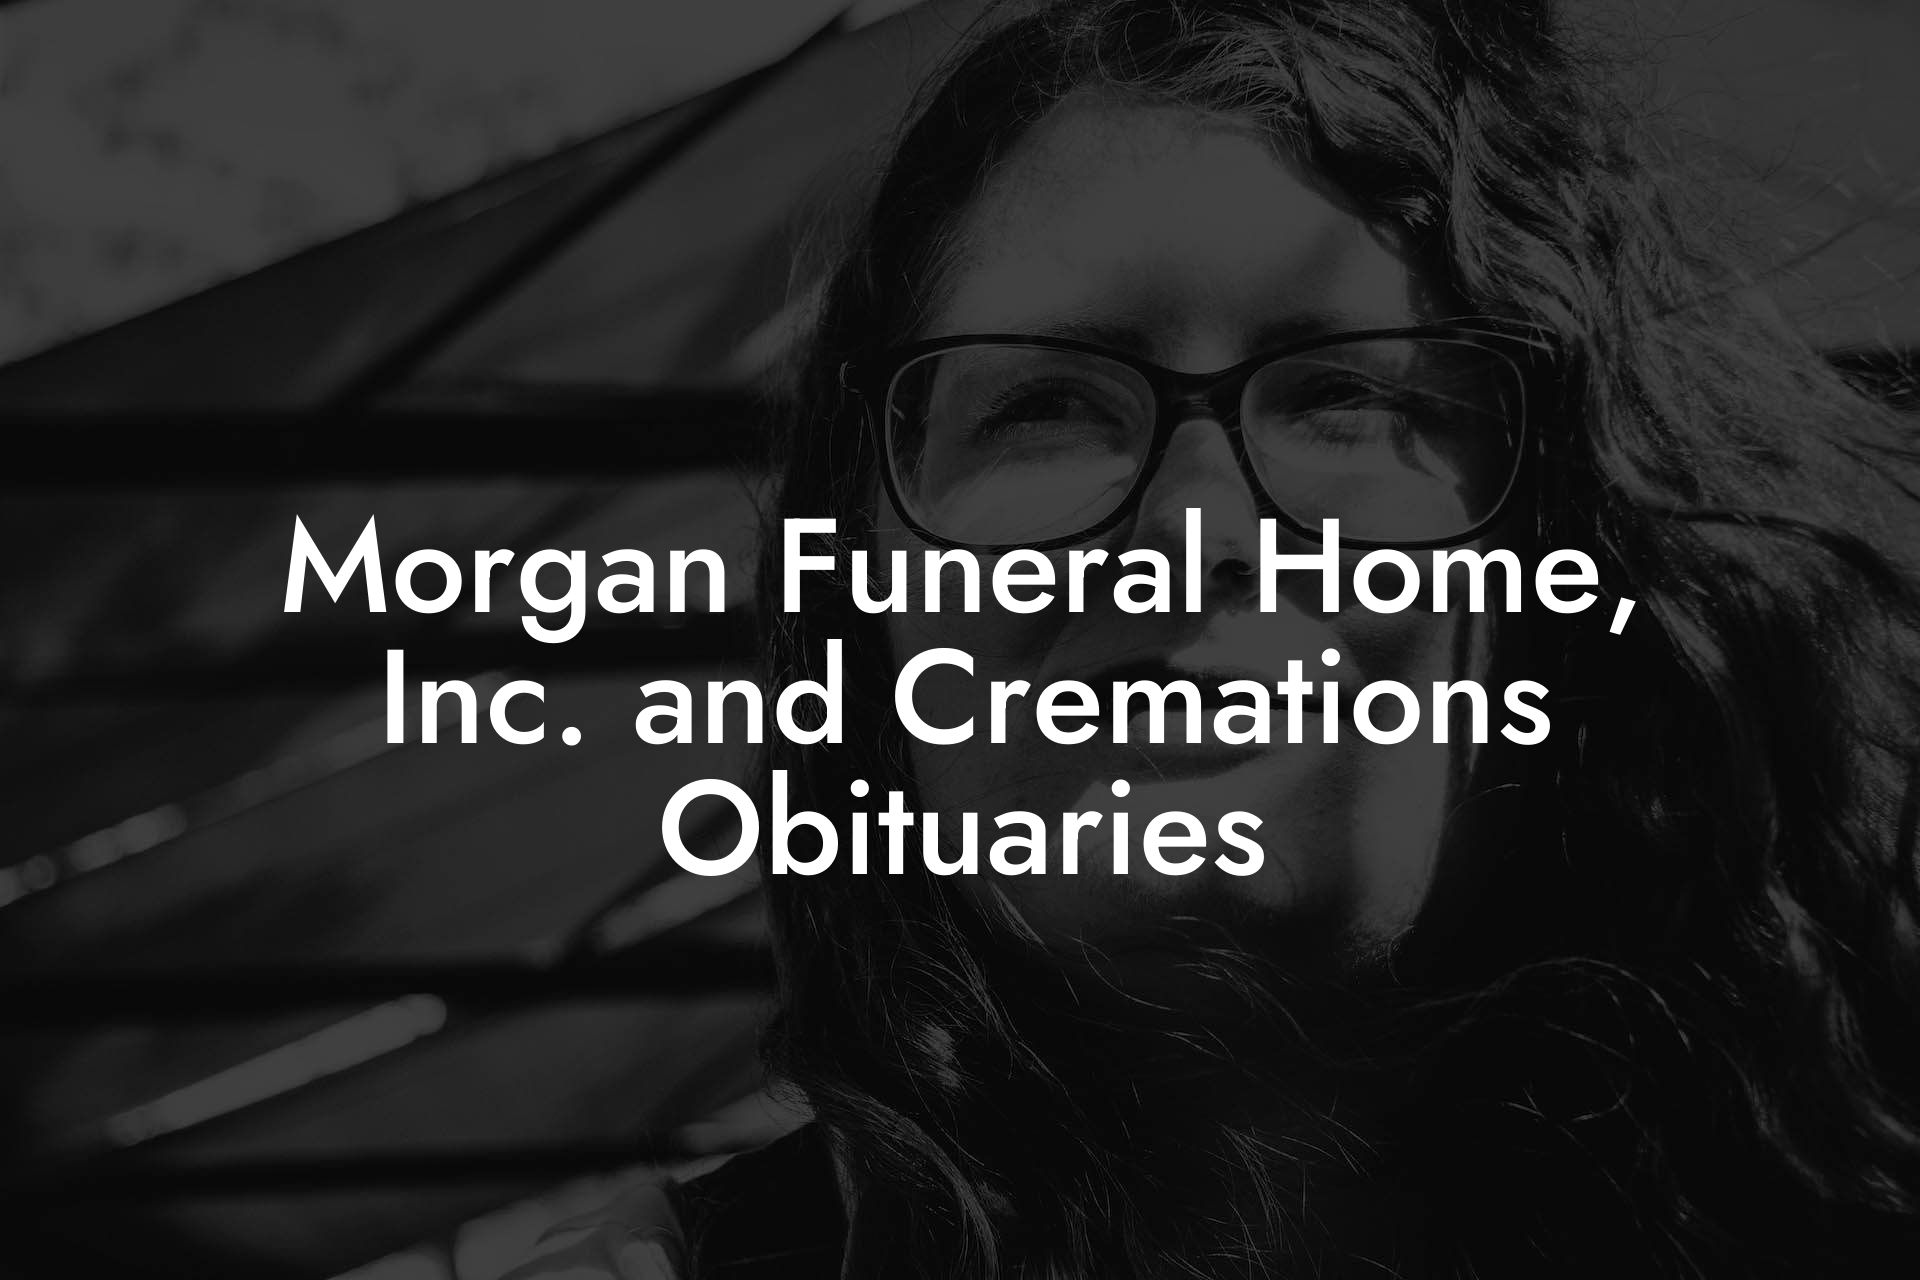 Morgan Funeral Home, Inc. and Cremations Obituaries